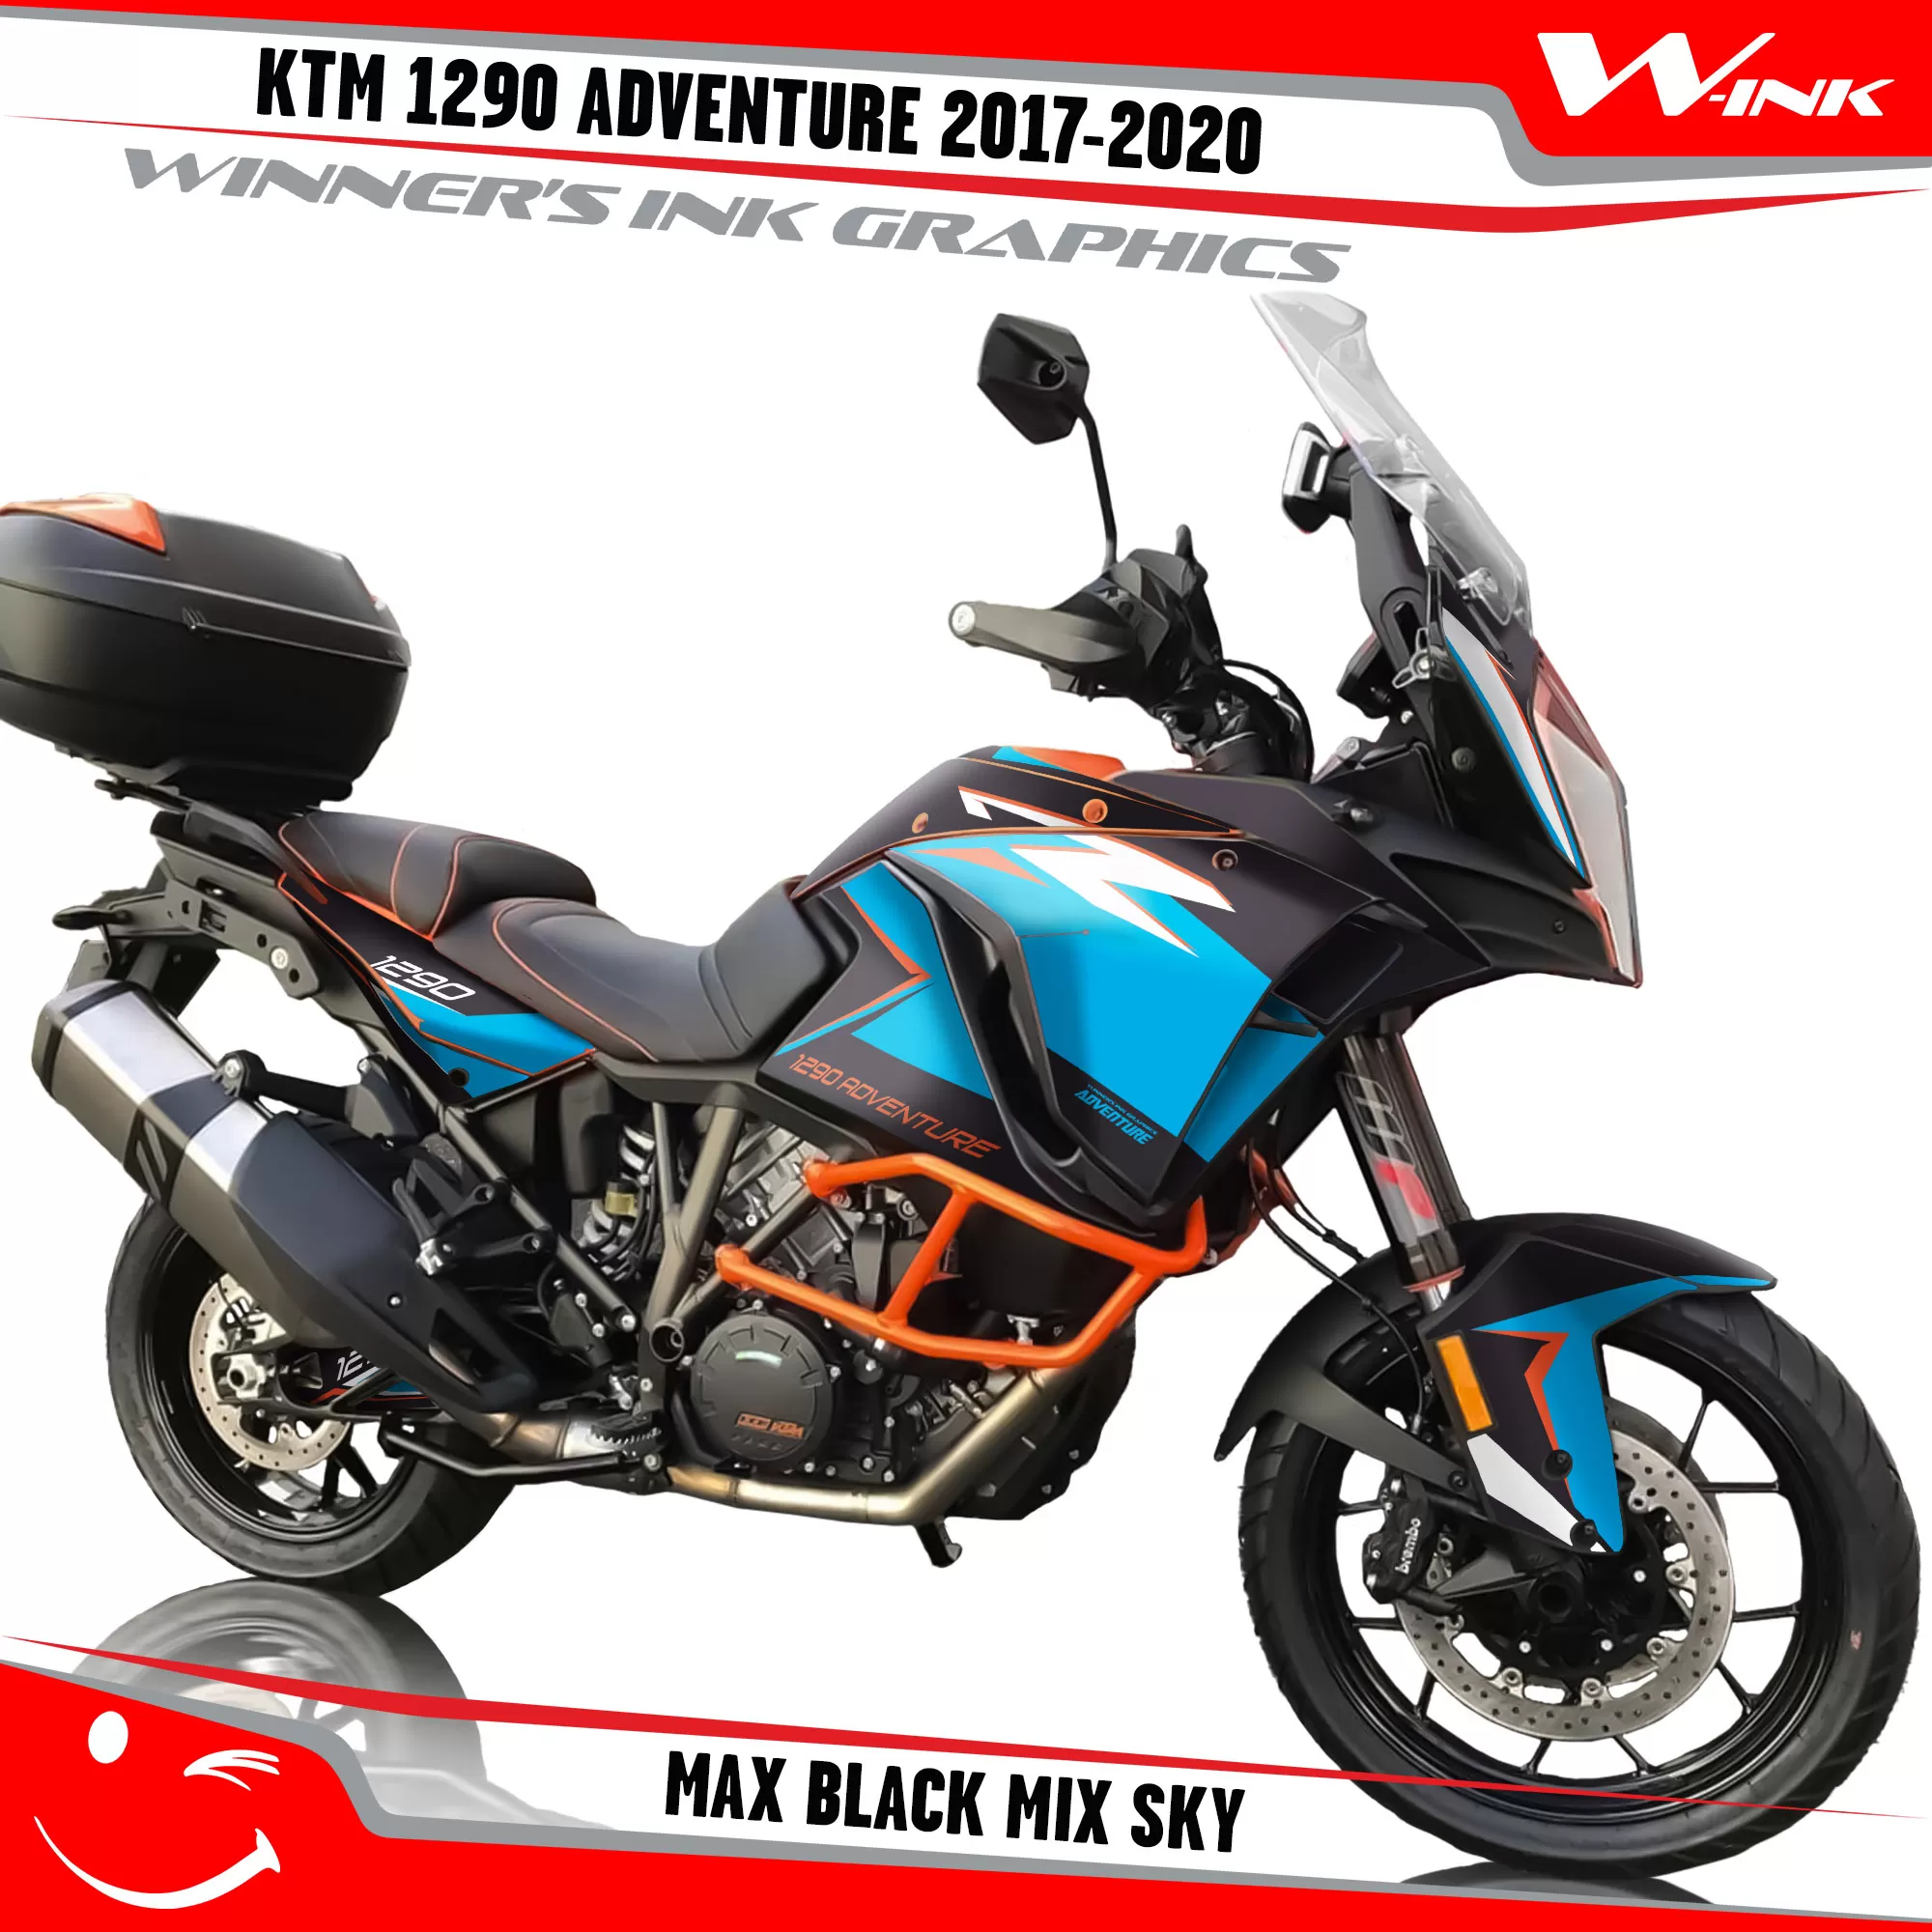 KTM-Adventure-1290-2017-2018-2019-2020-graphics-kit-and-decals-Max-Black-Mix-Sky